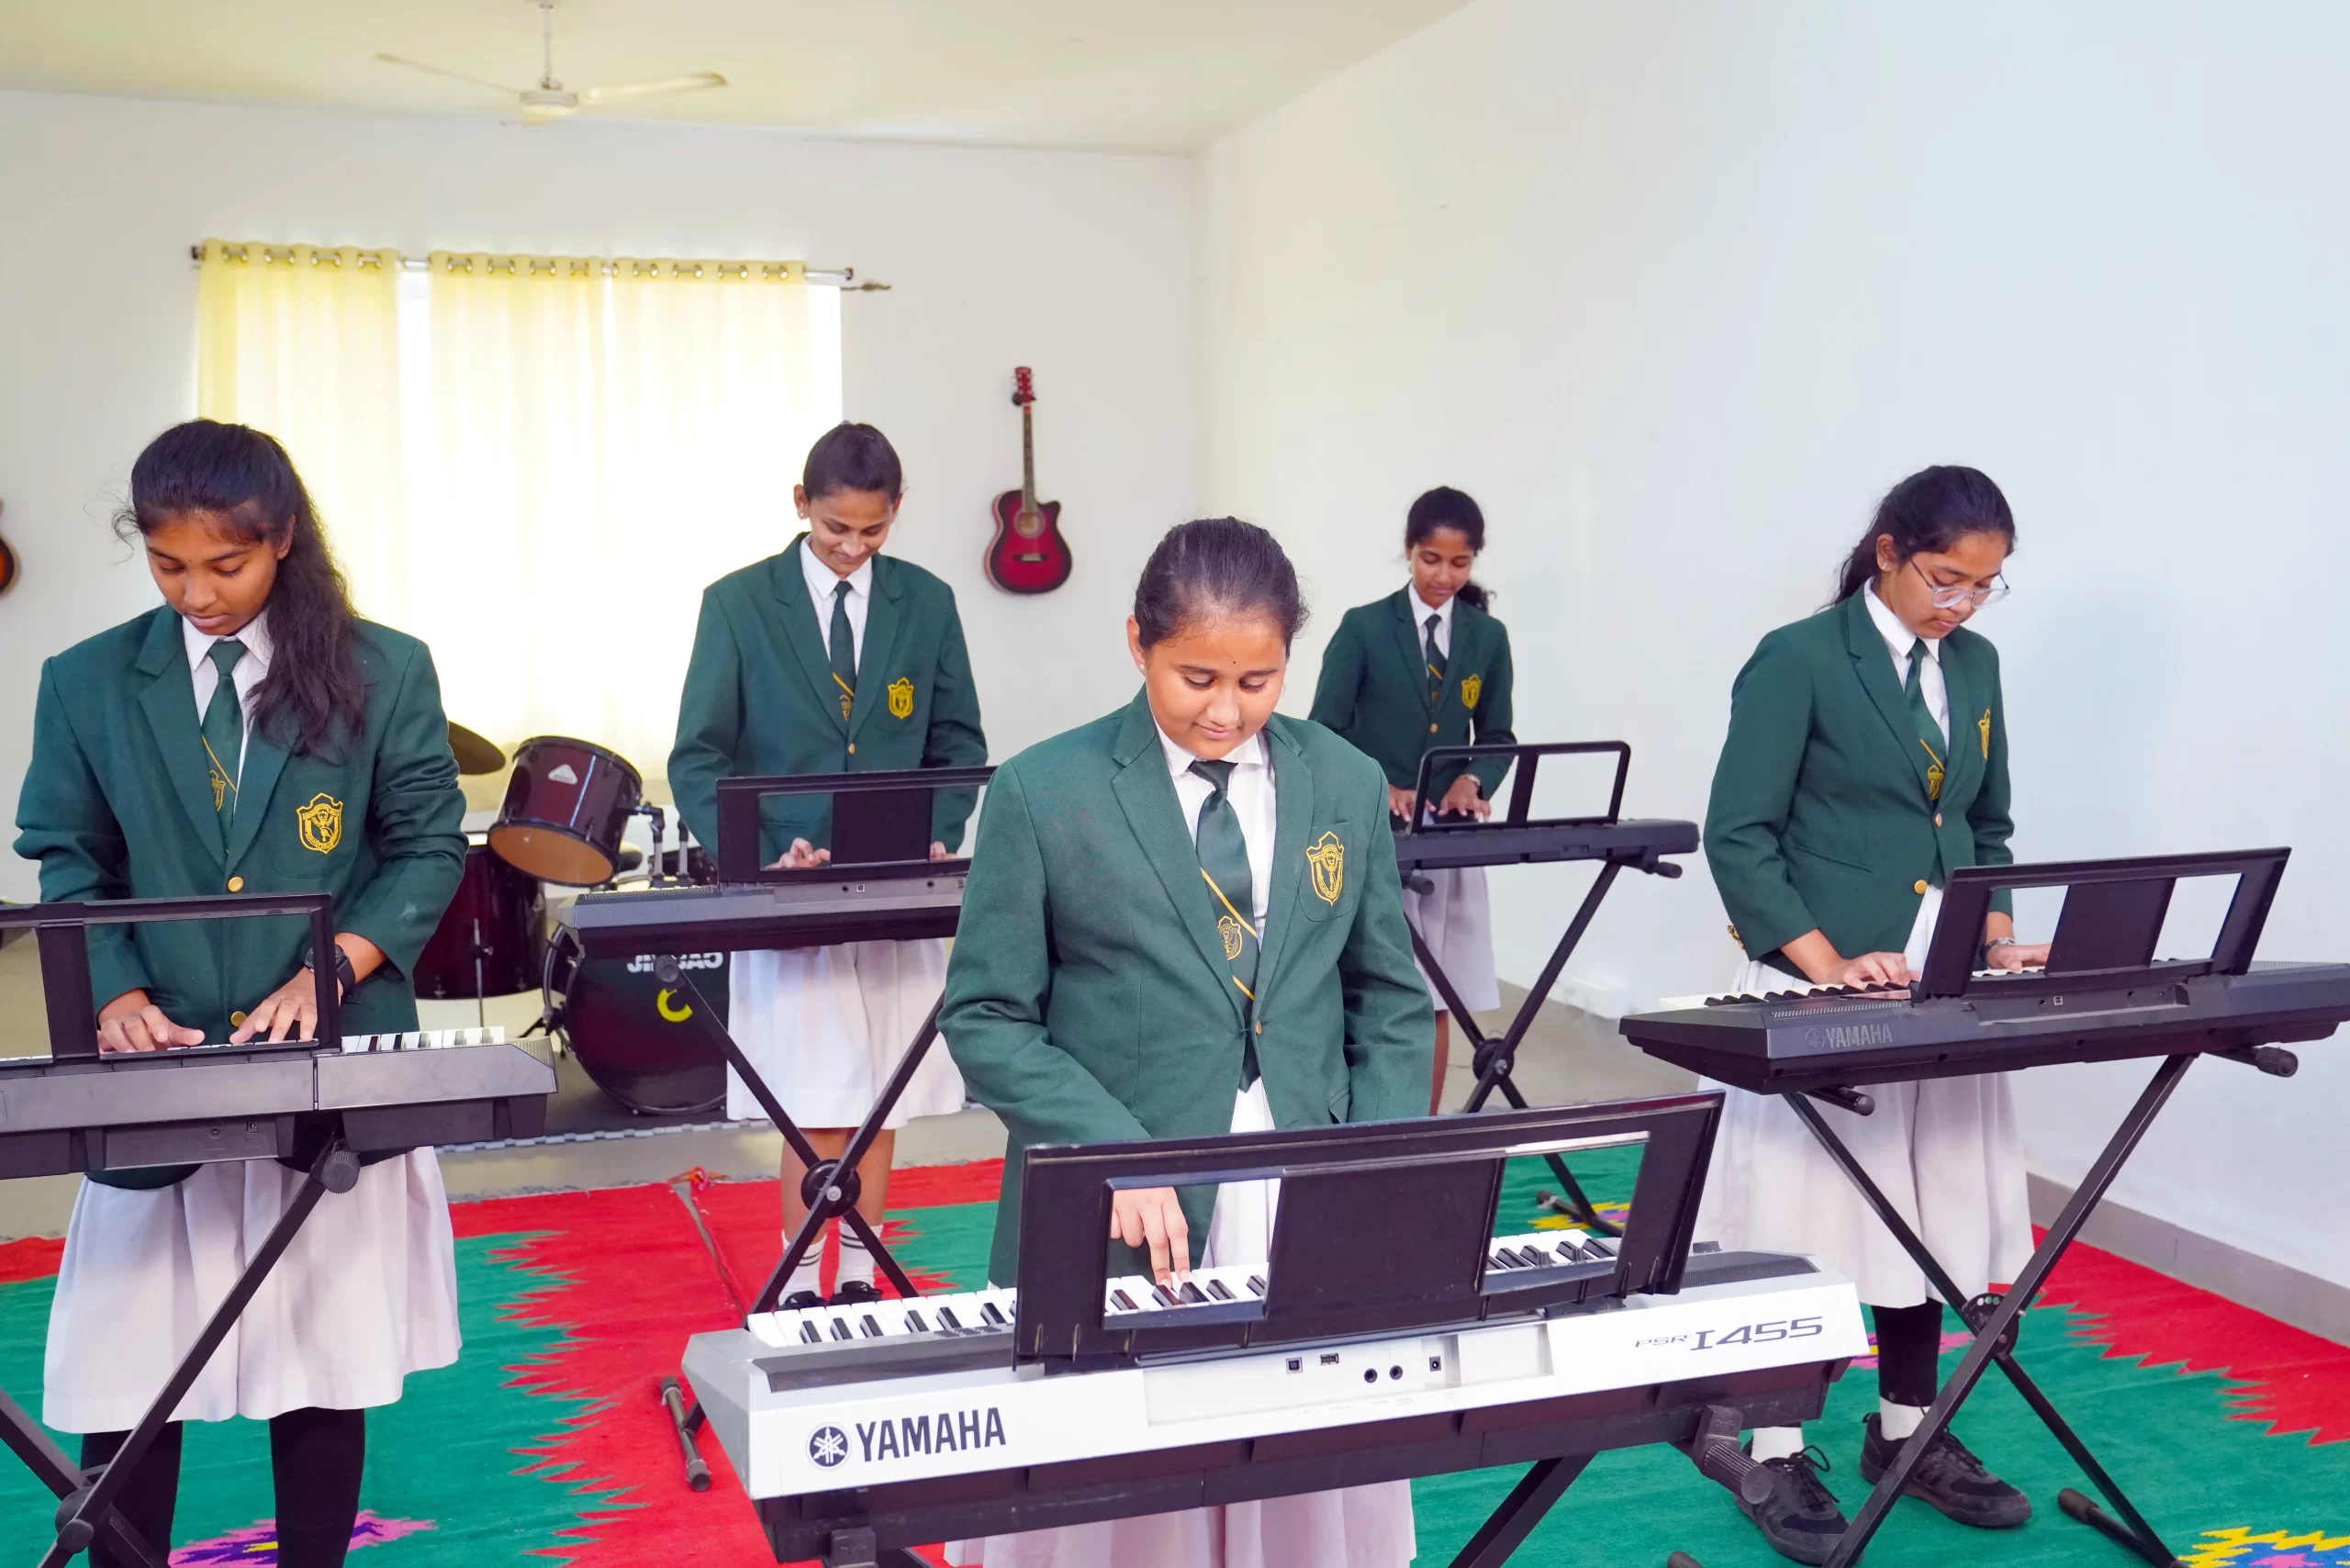 Girls in school uniform playing keyboard in the music hall of DPS, Warangal.